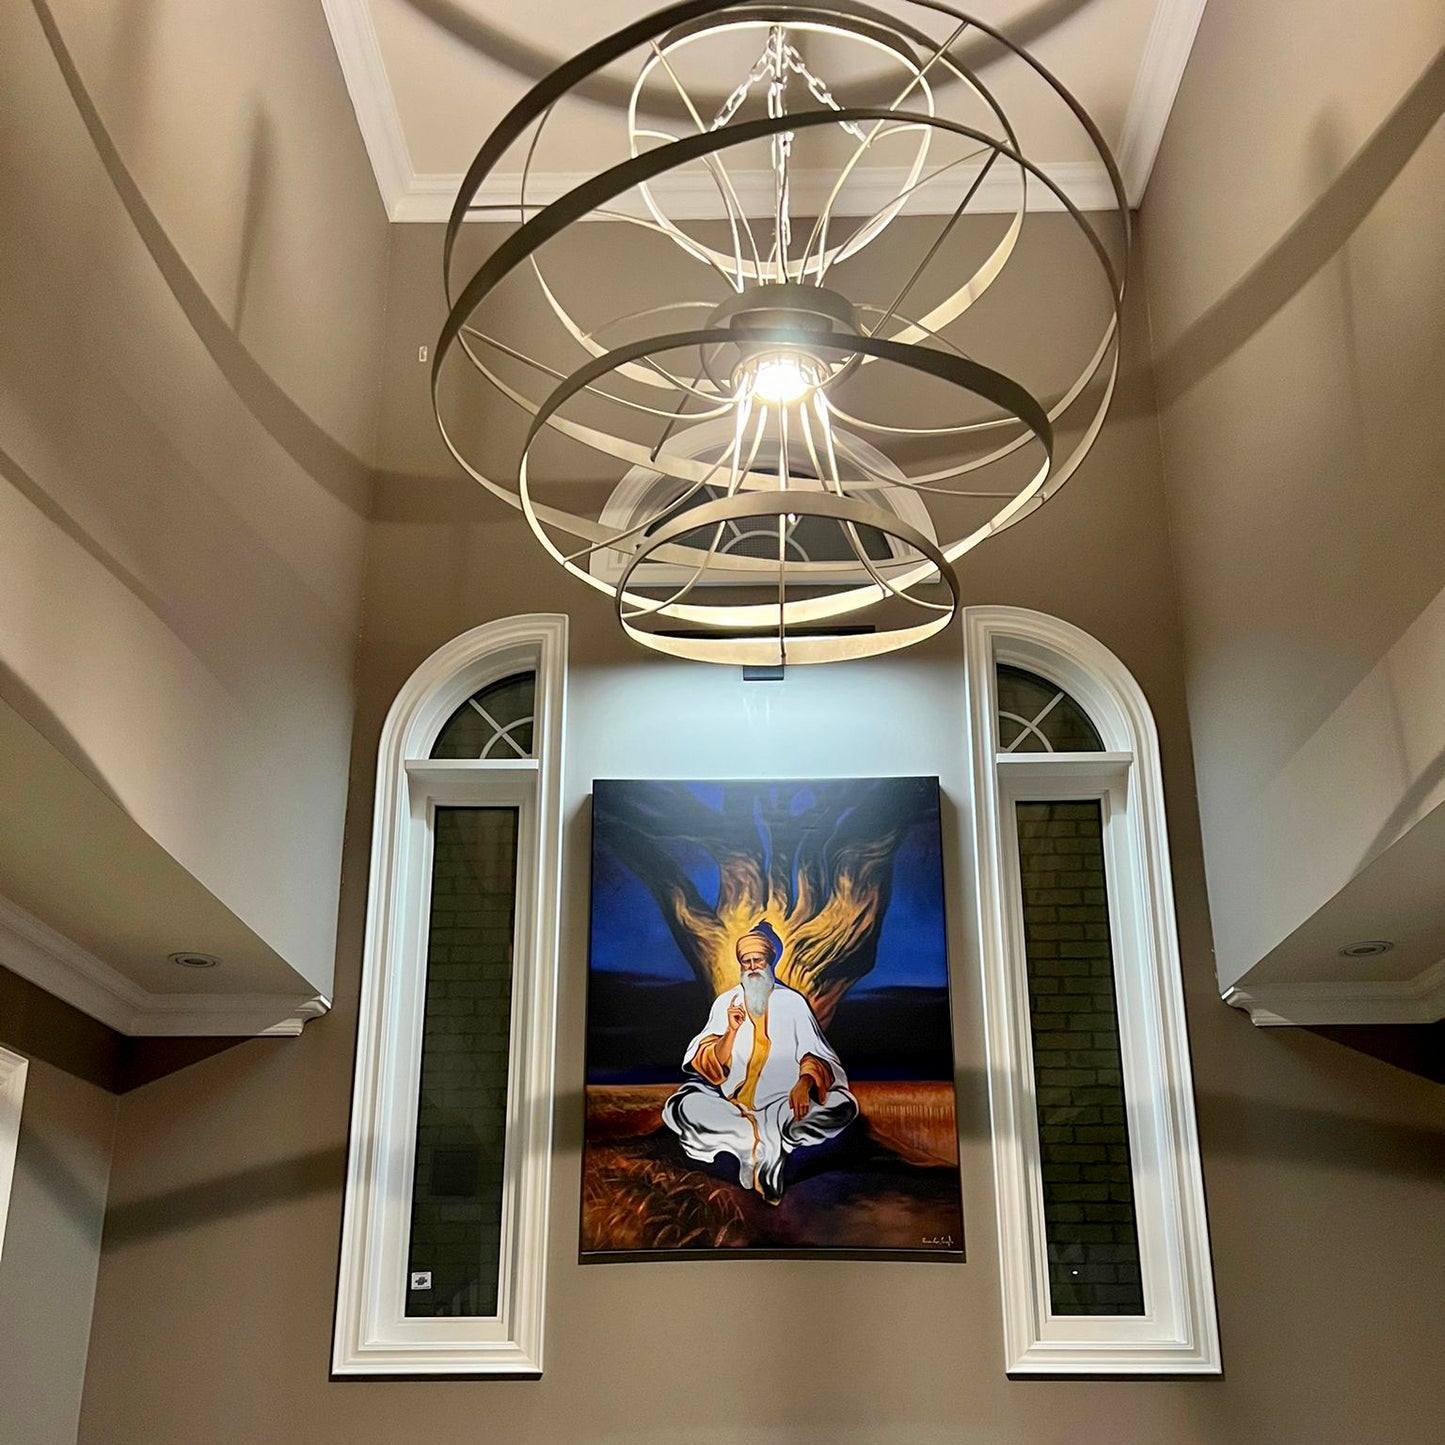 Guru Nanak Sikh art for your home décor